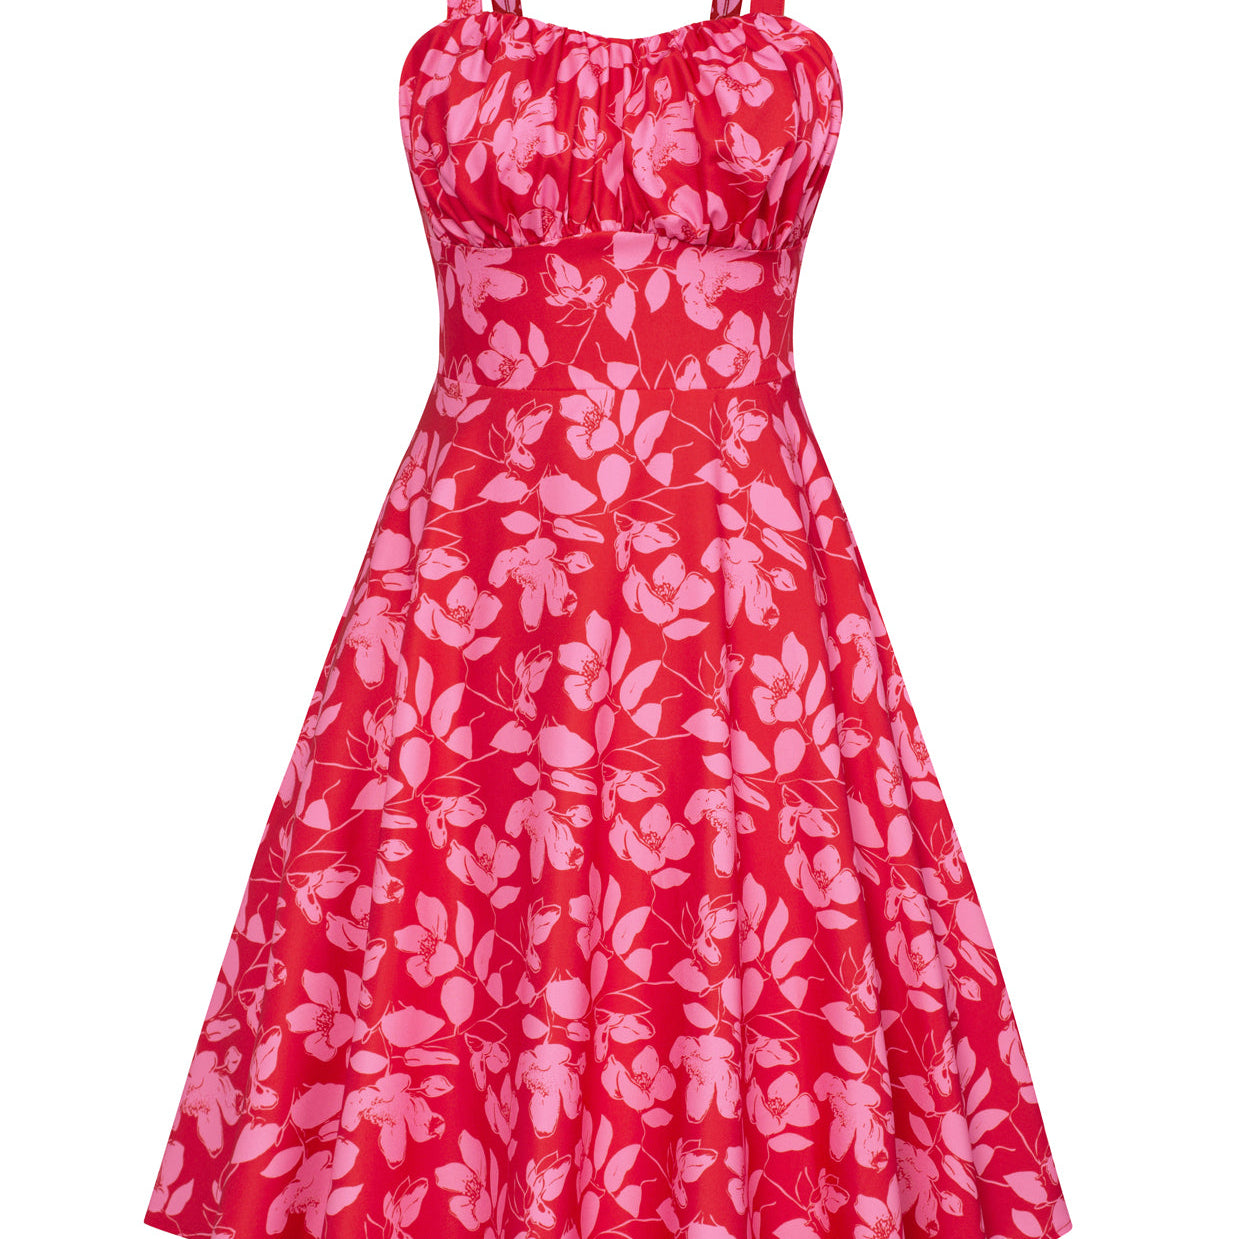 Vintage Leaf Patterns Two-Way Defined Waist Dress Ruched Bodice Flared A-Line Dress